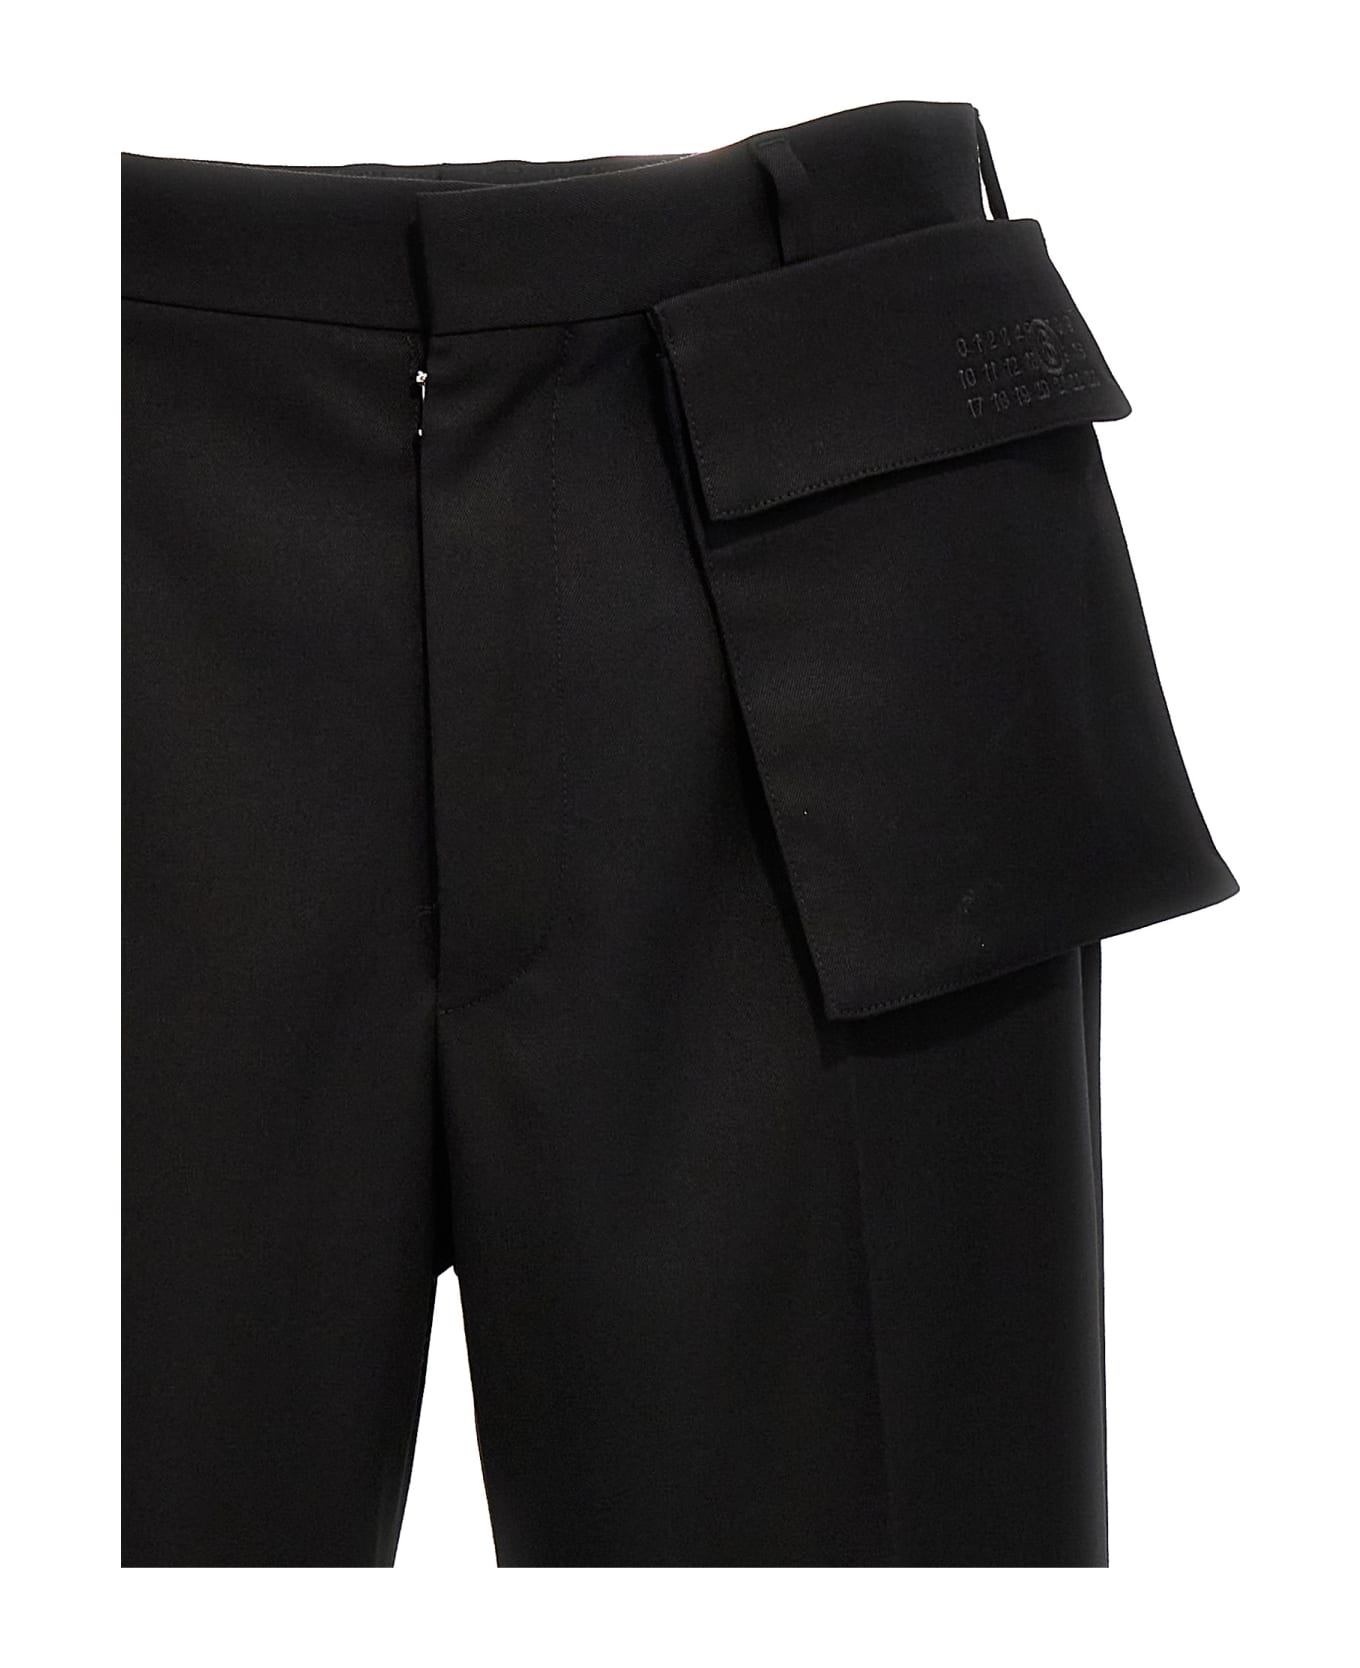 MM6 Maison Margiela Front Pocket Pants - Black ボトムス